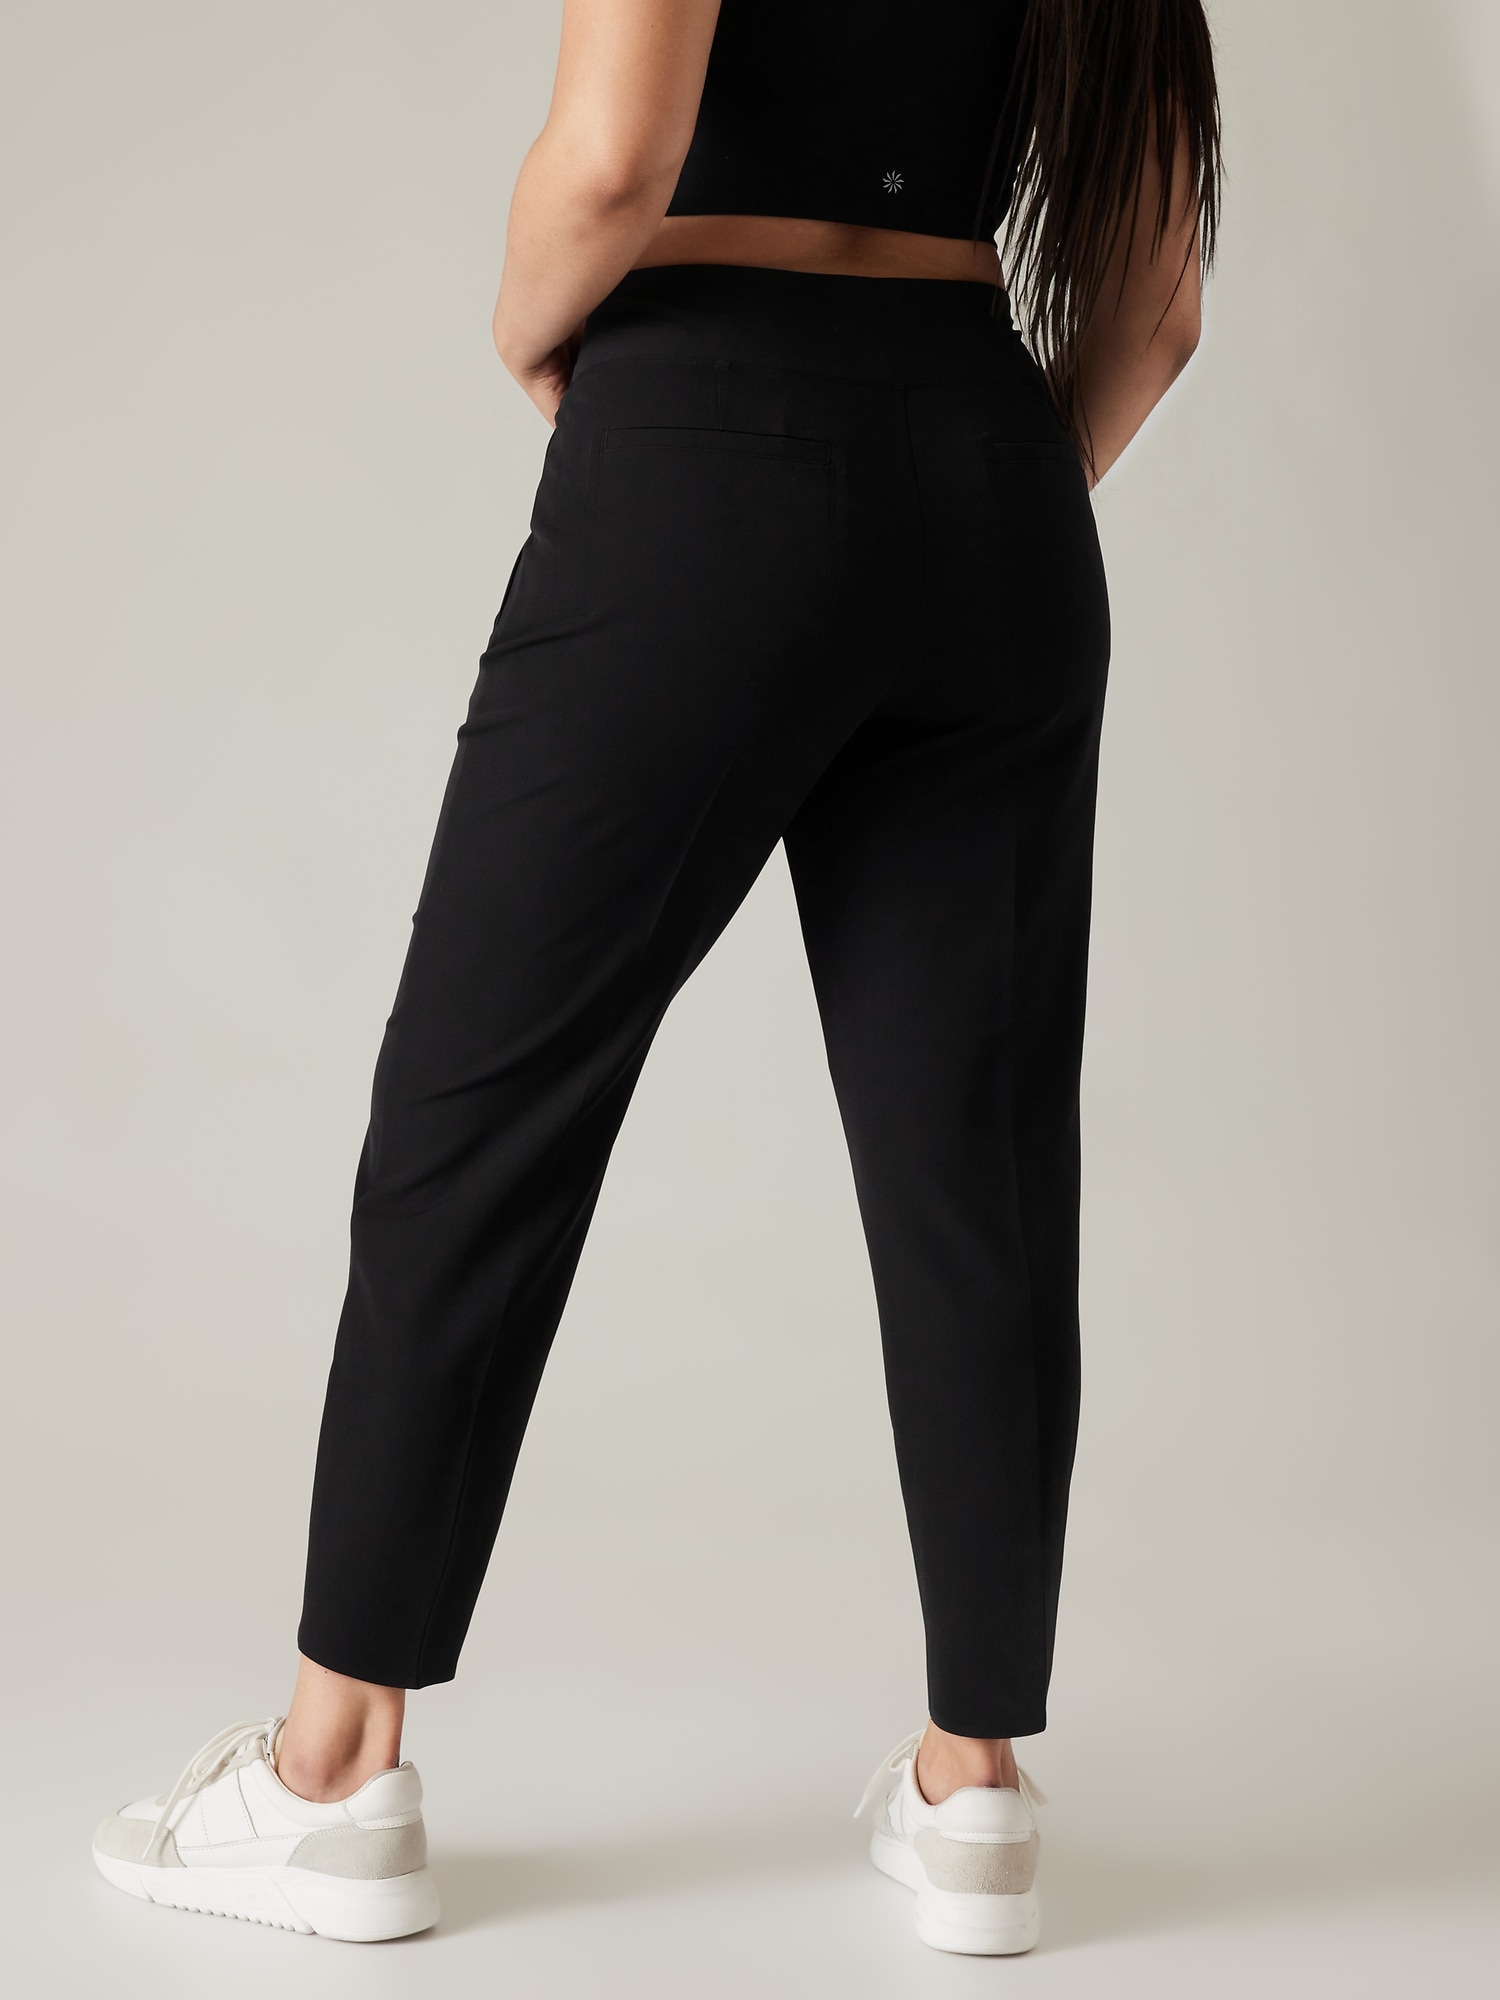 Lululemon Womens Pants Slim Fit Stretch Black Size 8